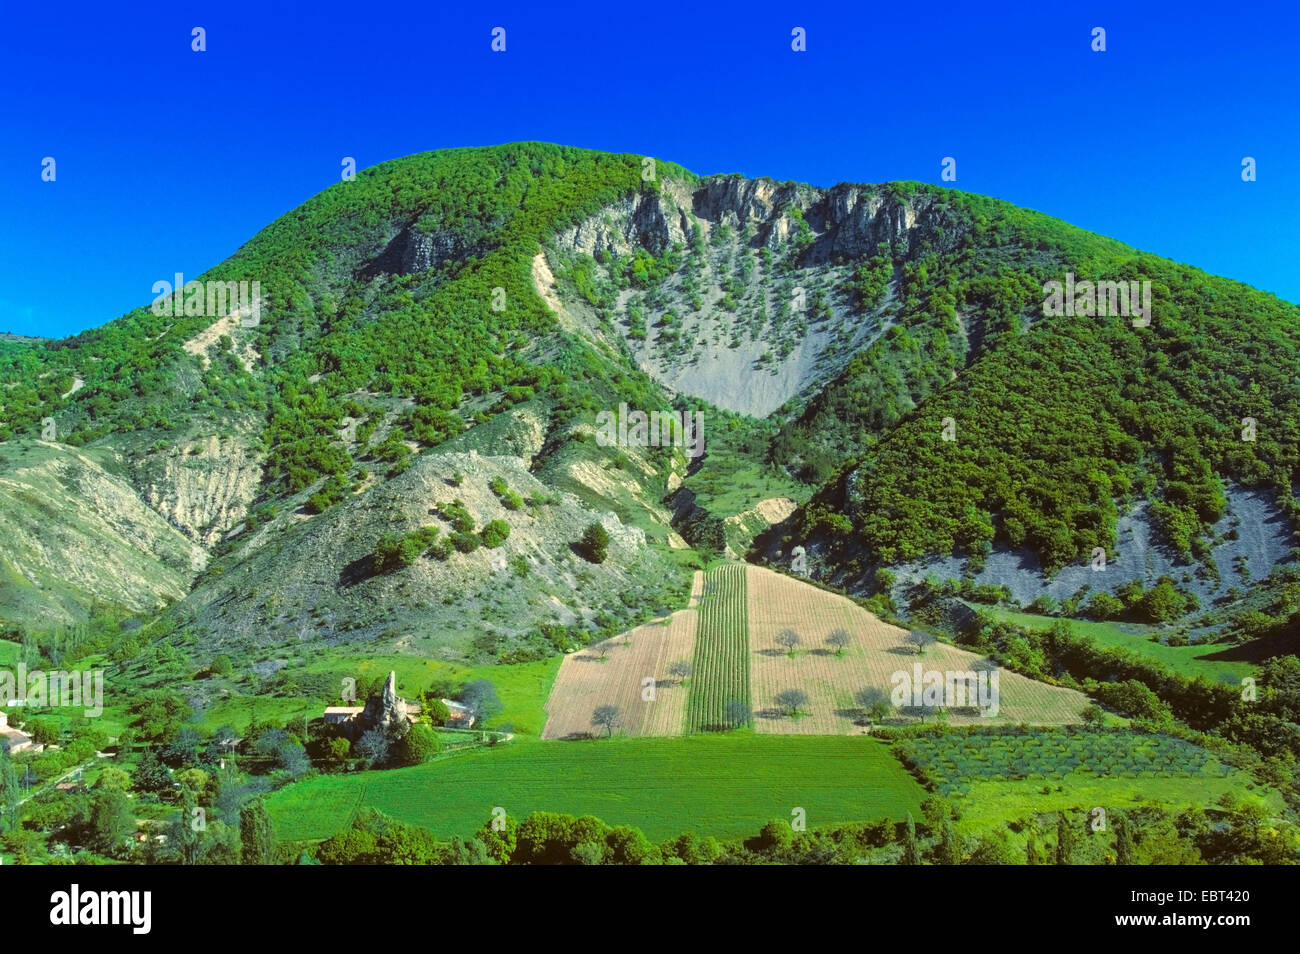 landslide at mountain slope, France, Provence, Ventoux, Montbrun Stock Photo